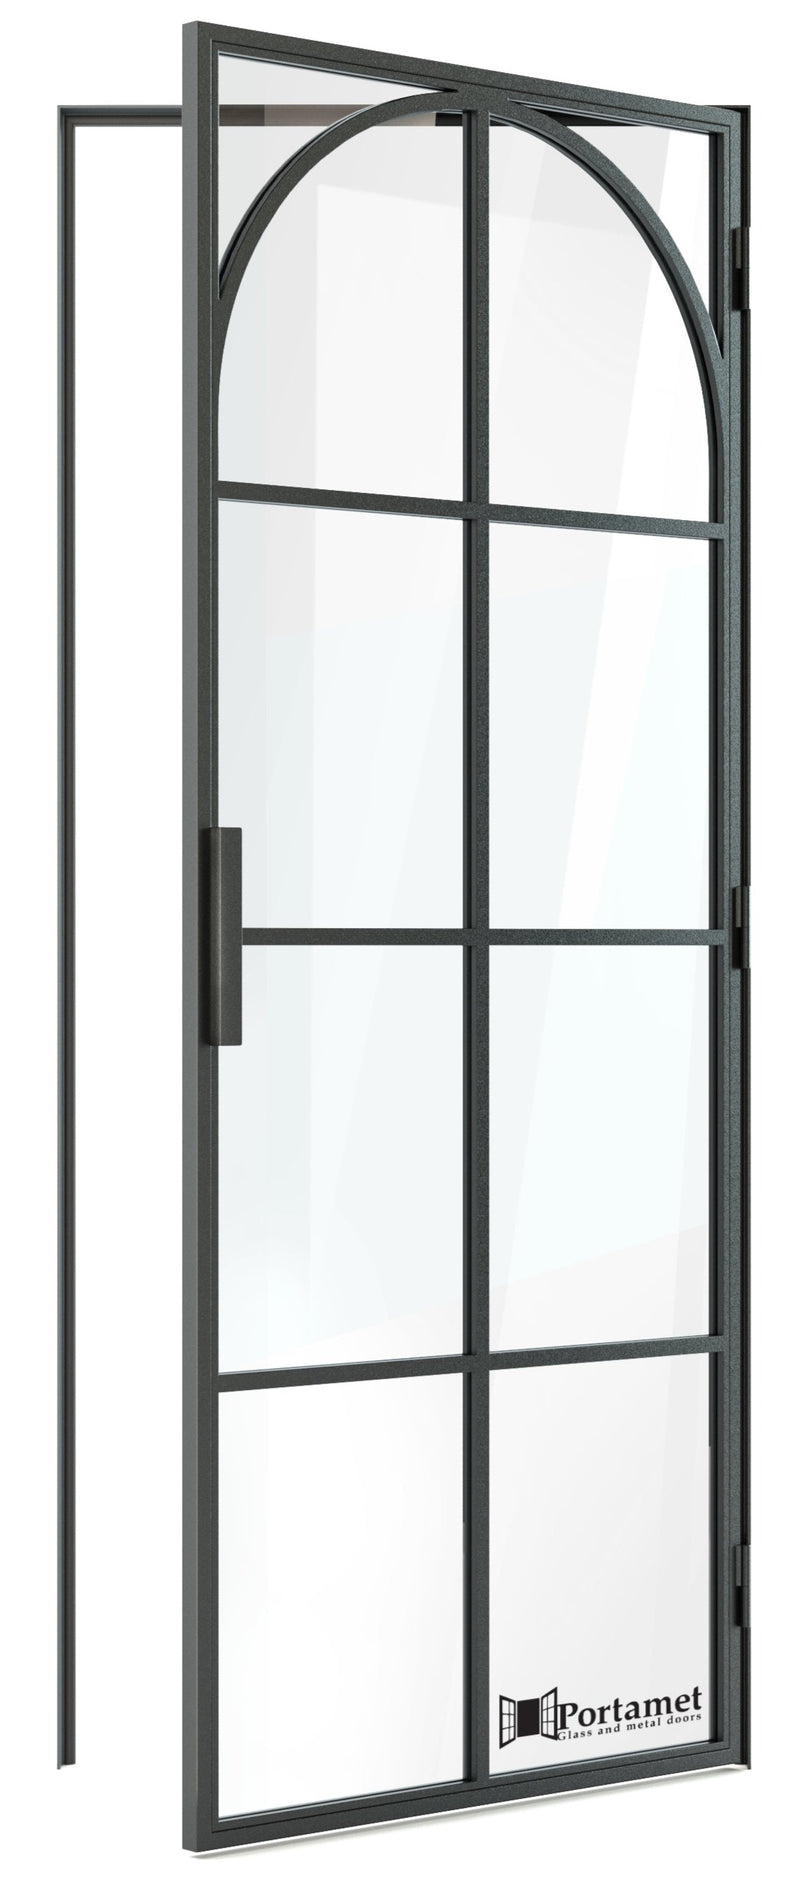 Portamet by Sfarzo - Arc Classic Single Glazed Steel Hinged Door with Frame